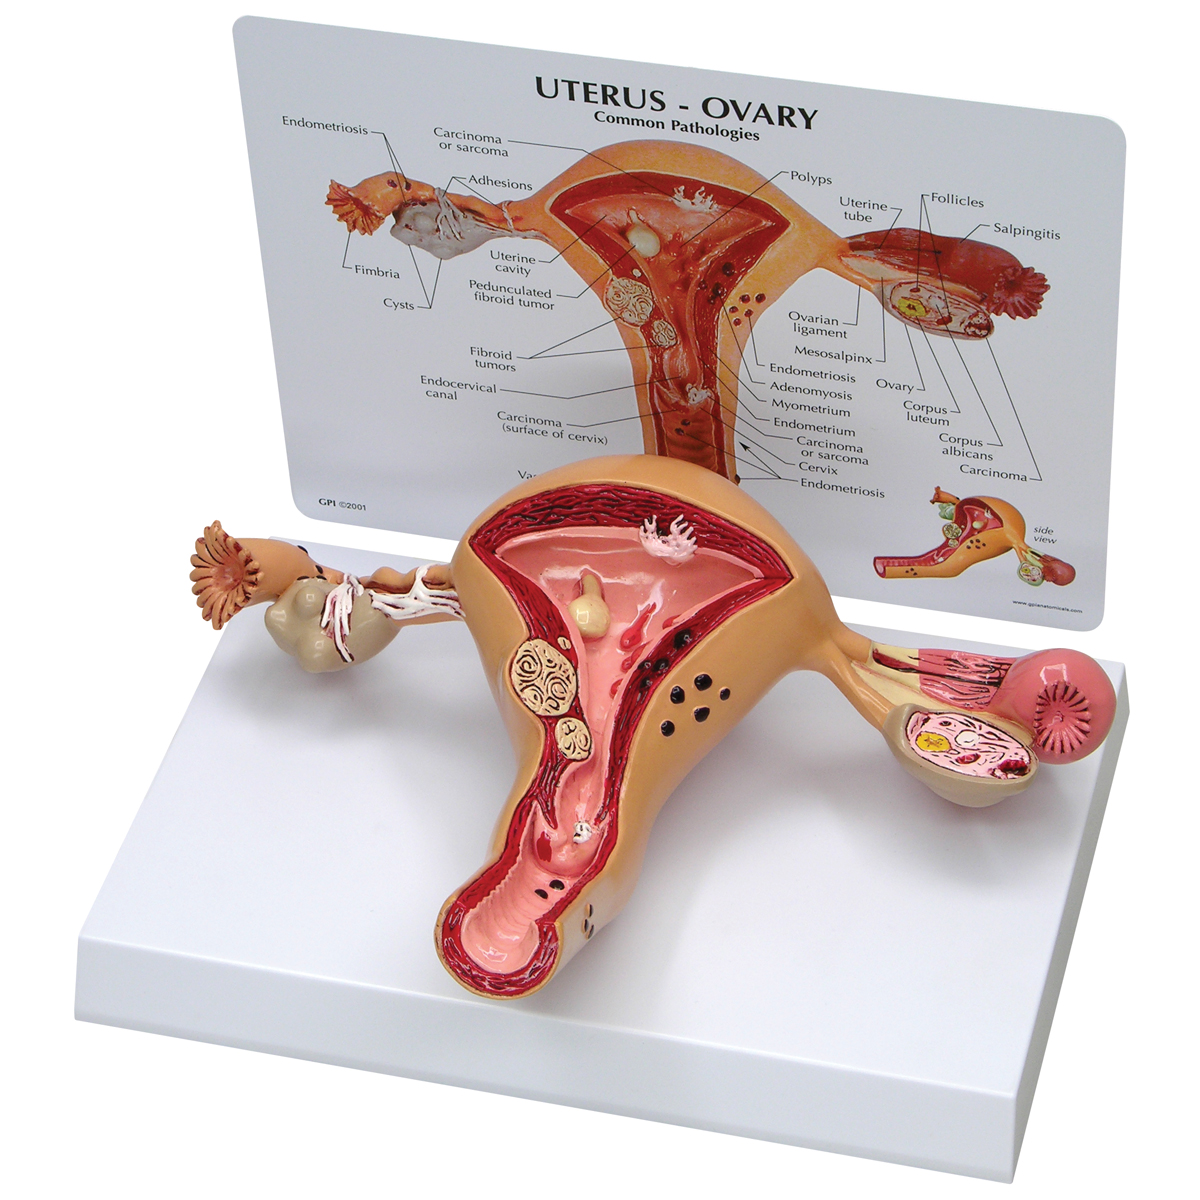 Total 42+ imagen modelo de utero